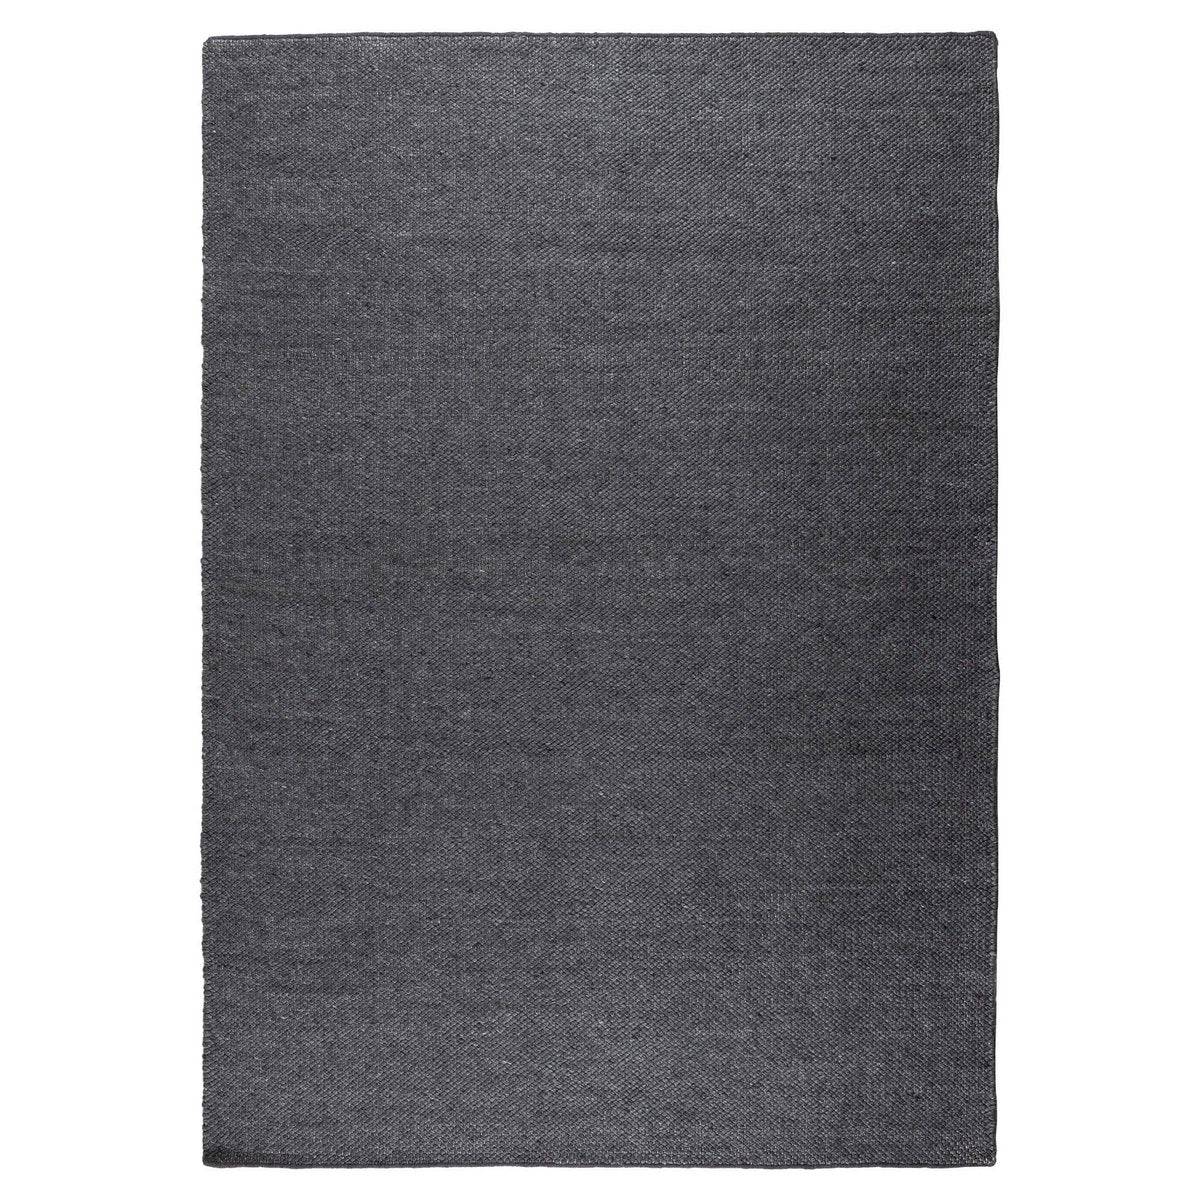 Wool Rug Dark Gray 140x200cm - Goldgenix